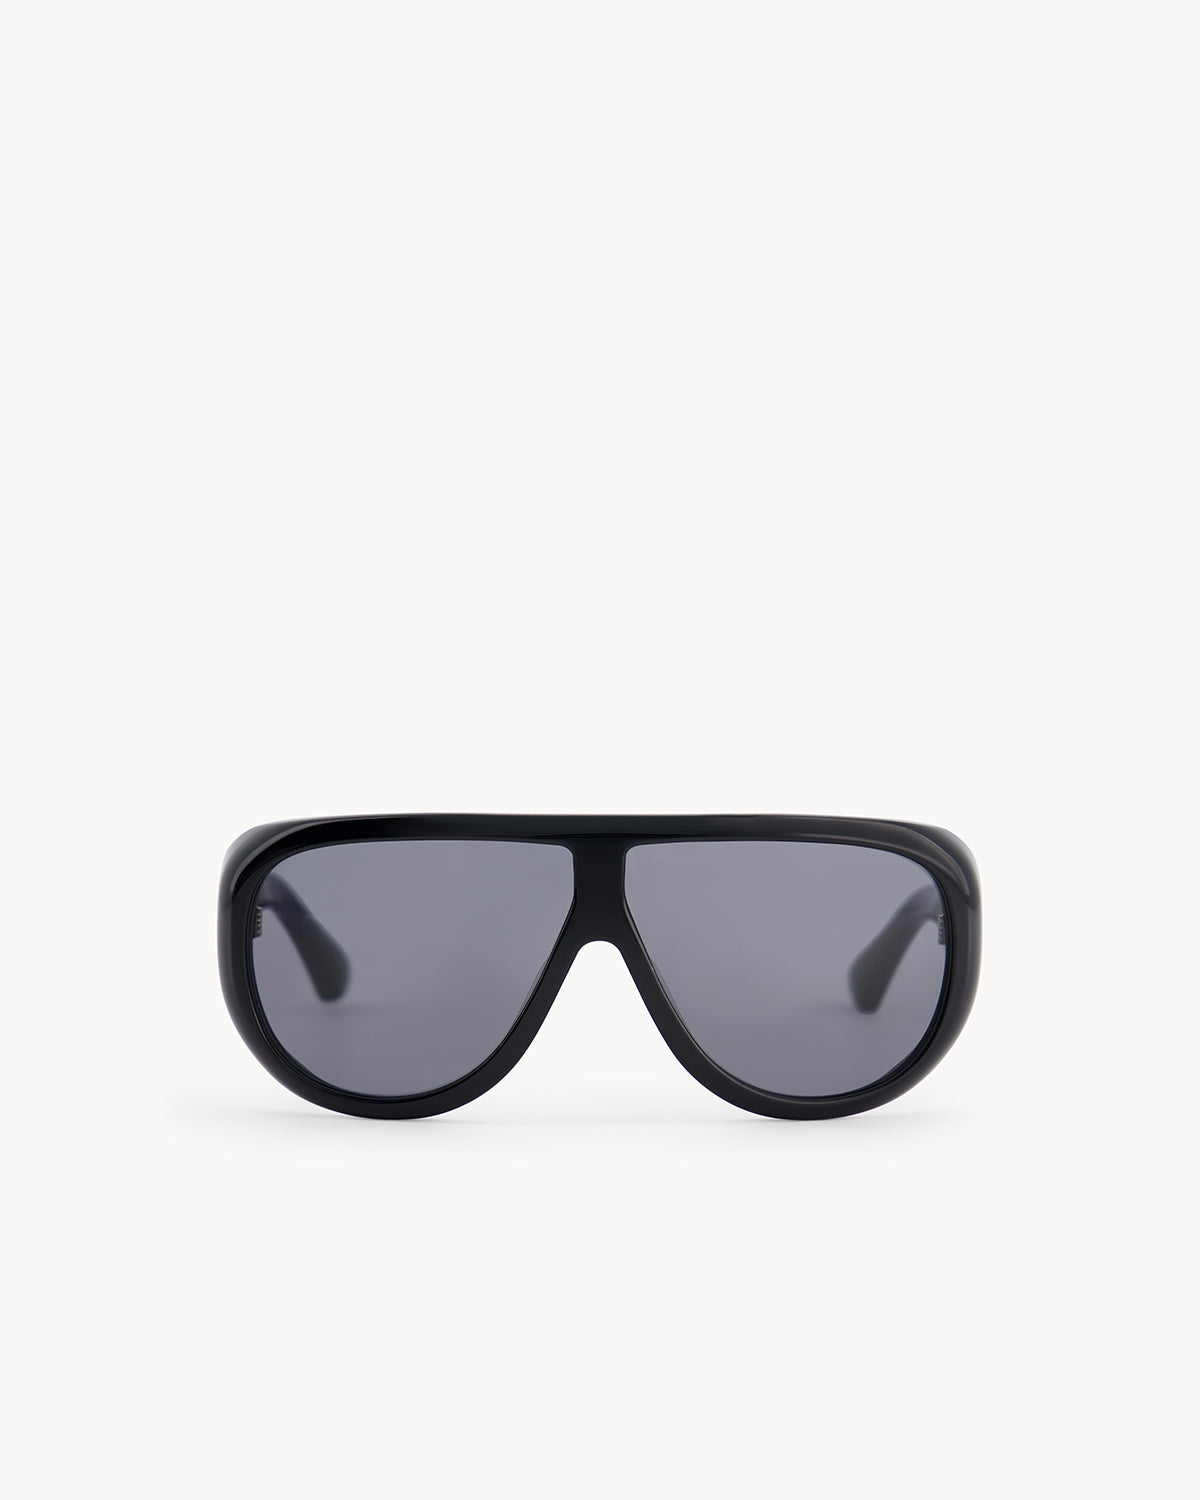 Port Tanger Gambia Sunglasses in Black Acetate and Black Lenses 1